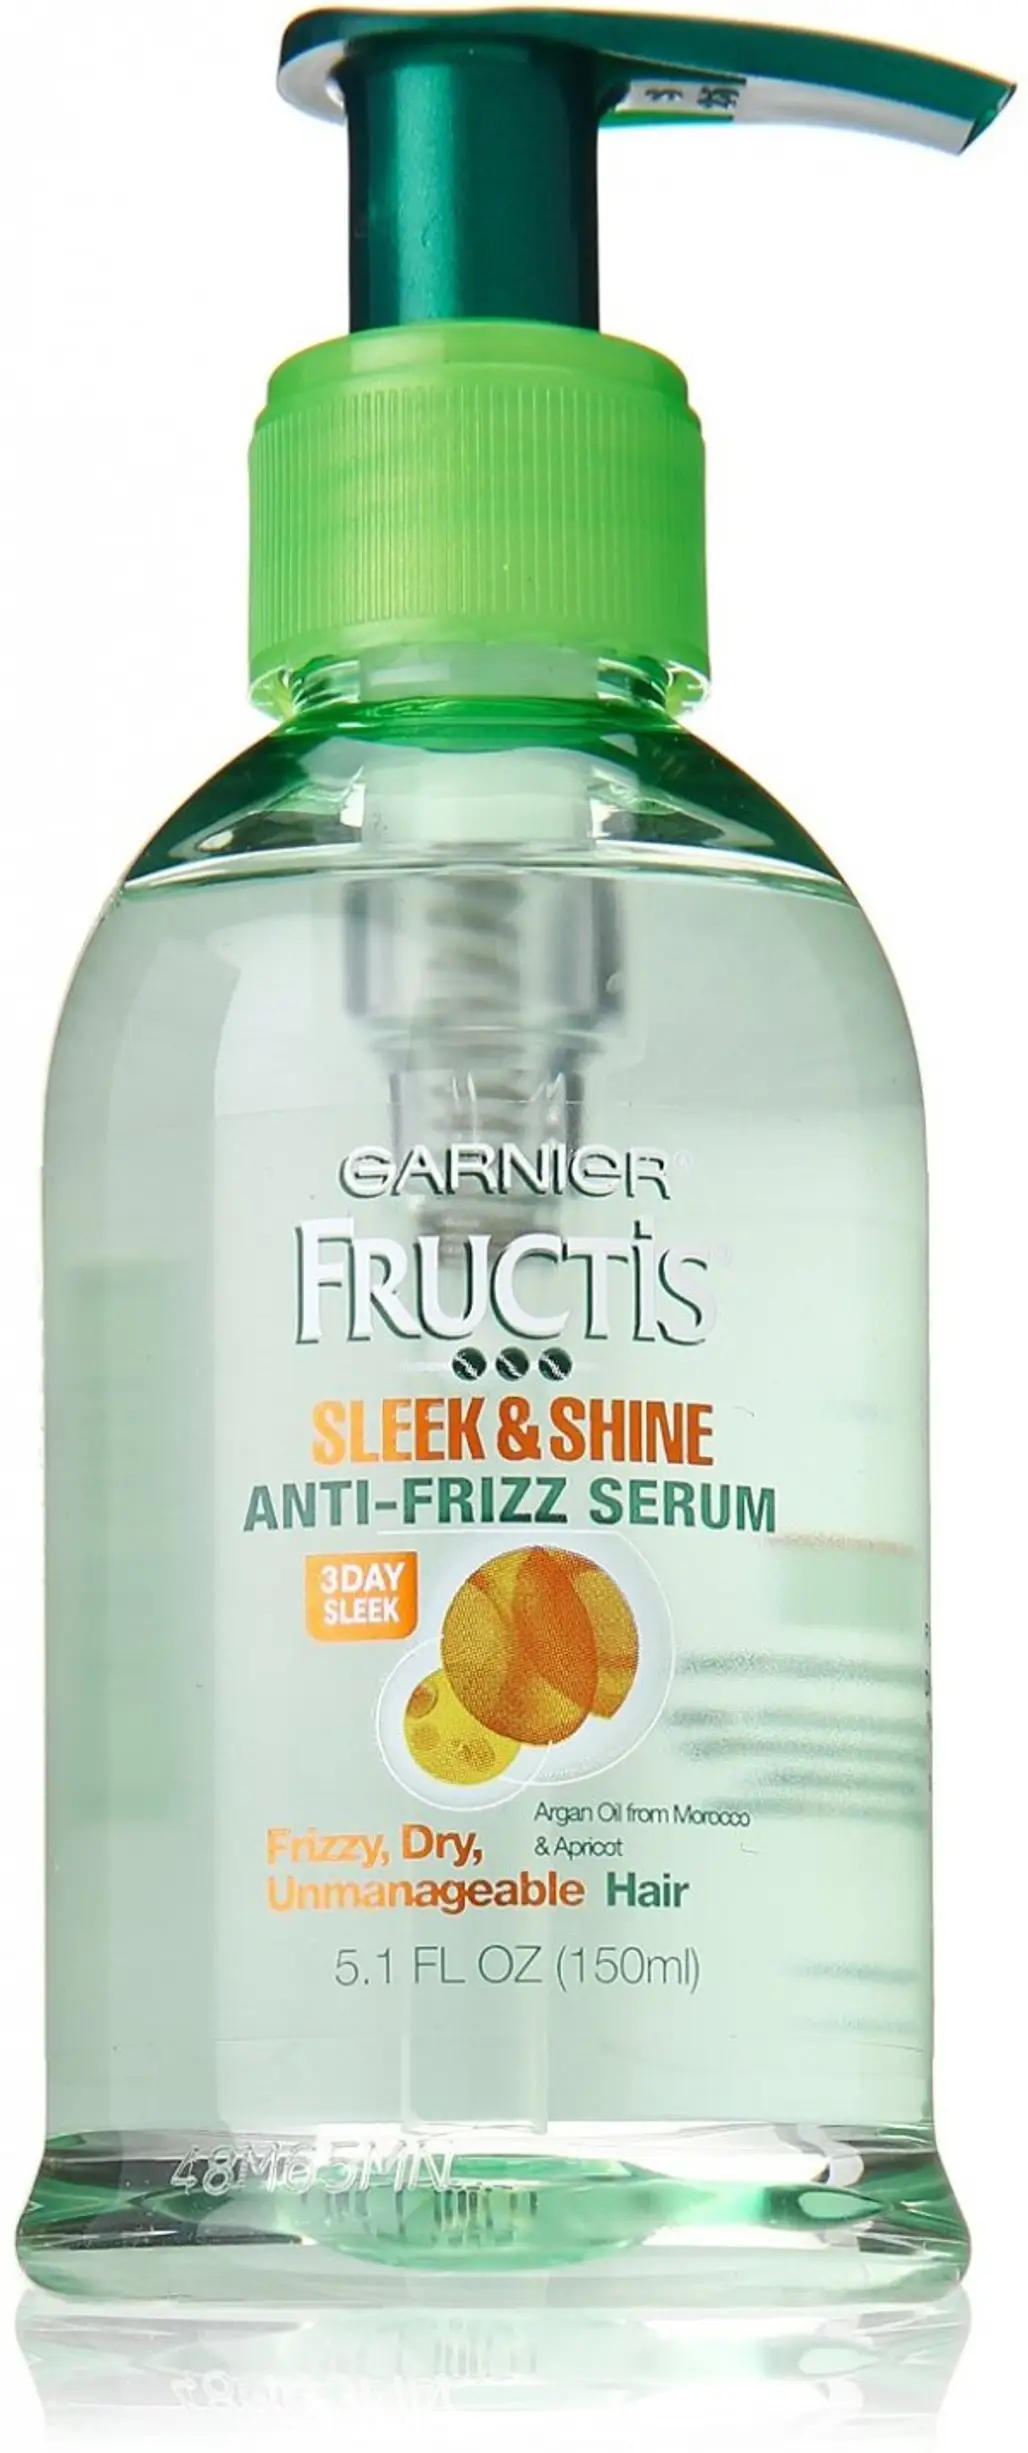 Garnier Fructis Sleek & Shine anti-frizz Serum